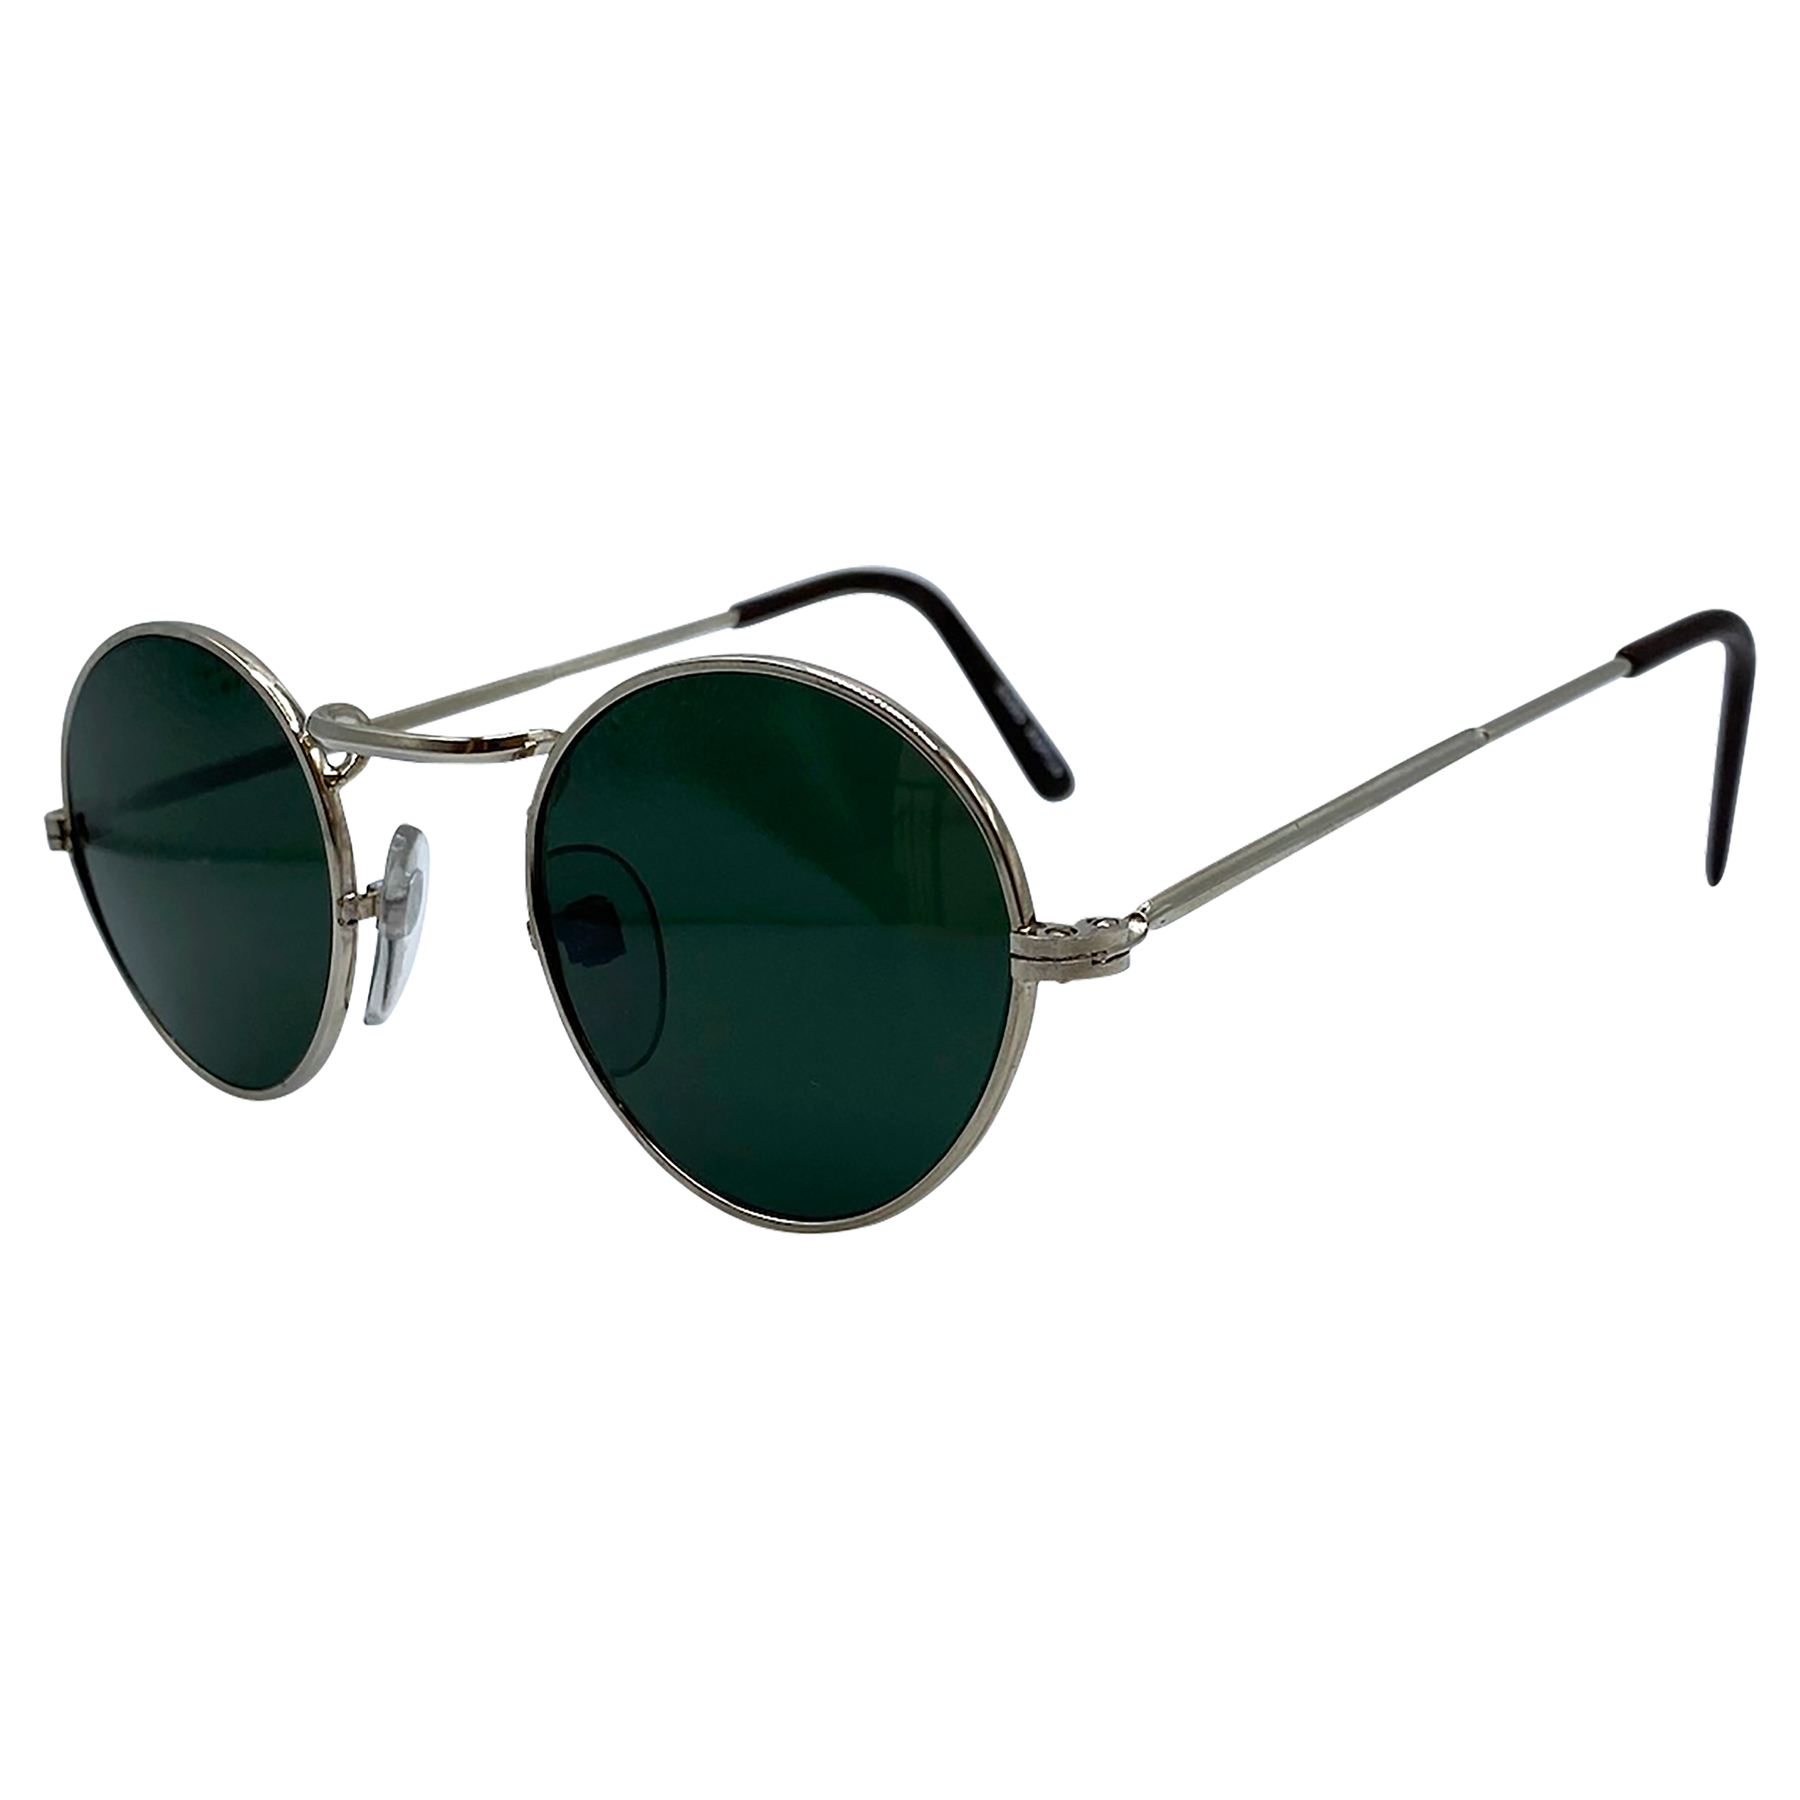 HARDING Silver/G12 Round 60s Sunglasses